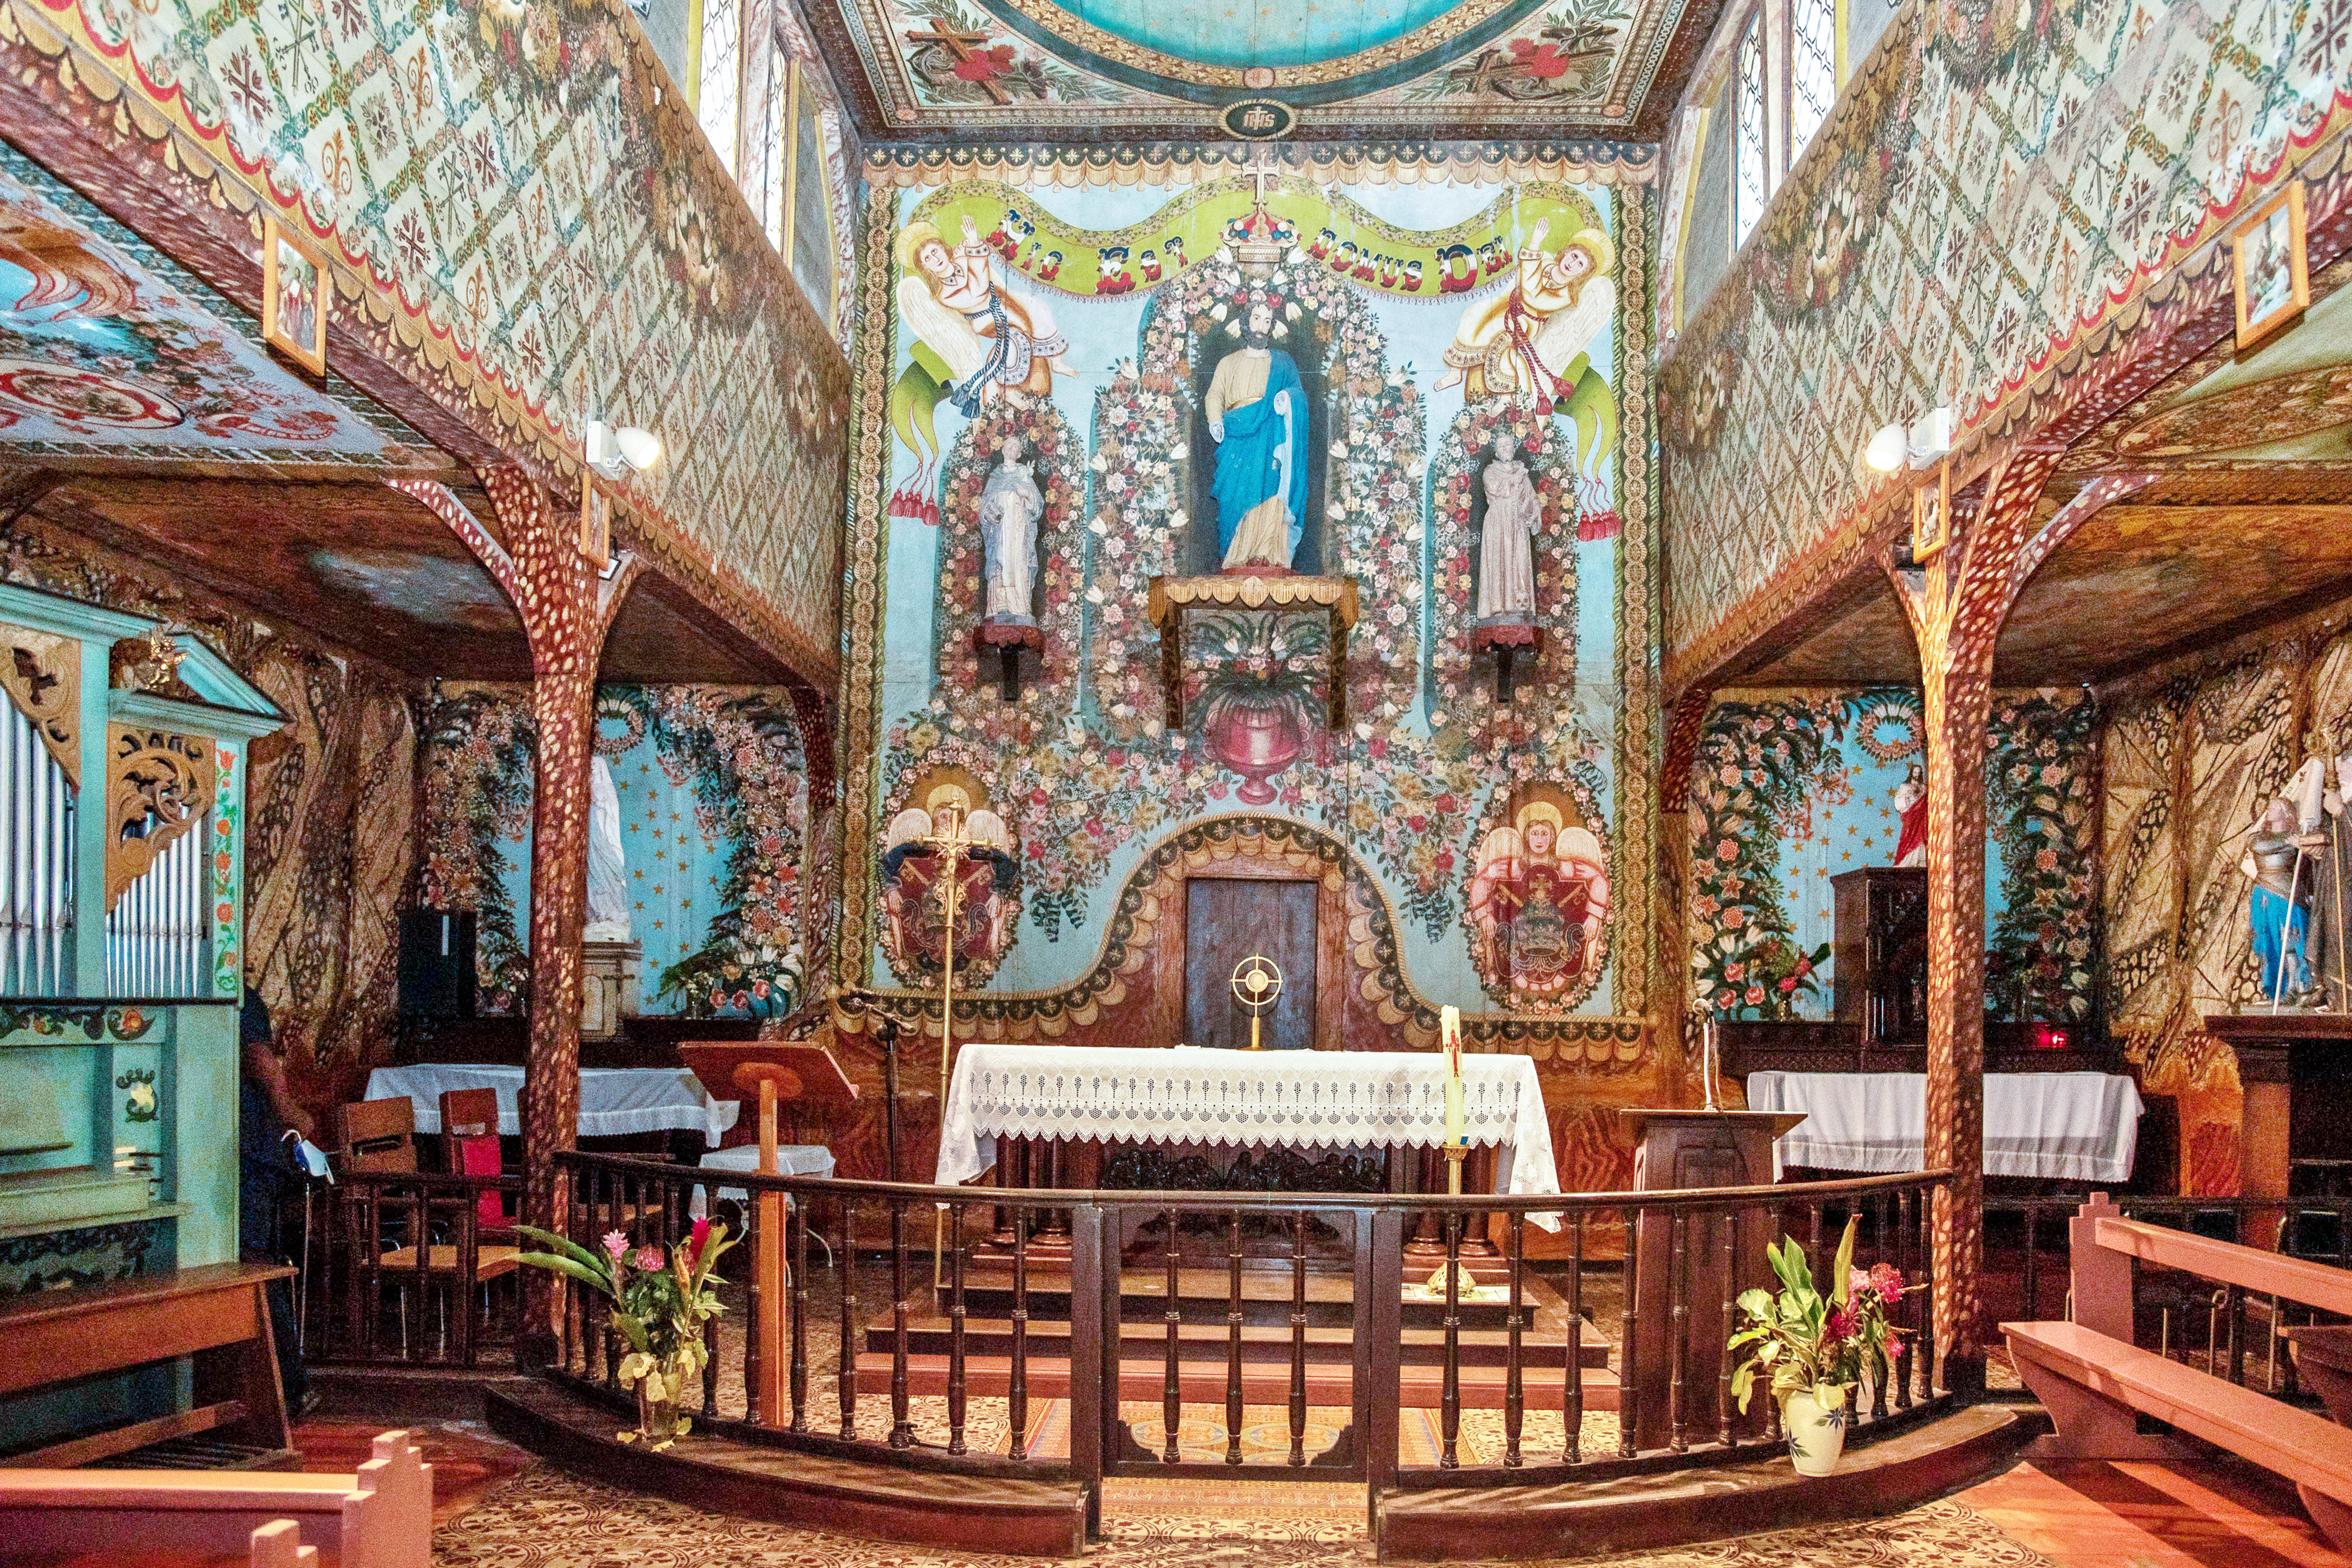 Guyane-Eglise-Saint-Joseph-dIracoubo-c-Ocus-Fondation-du-patrimoine-6.jpg